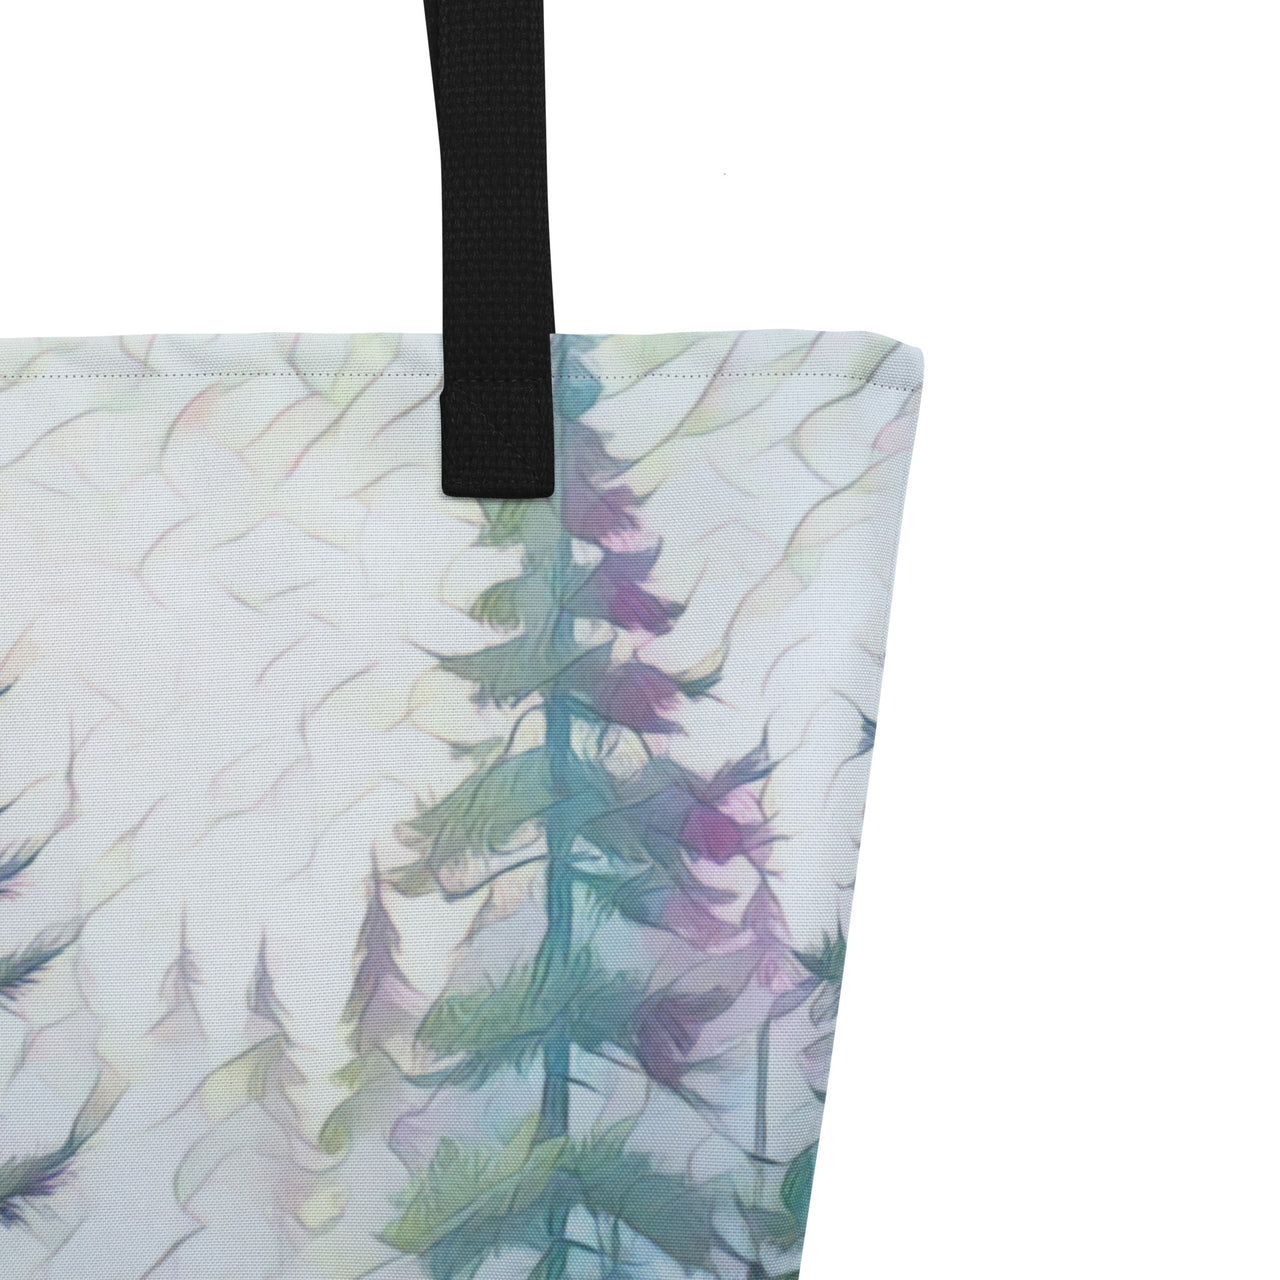 Into the Oregon Woods - Digital Art - Large 16x20 Tote Bag W/Pocket